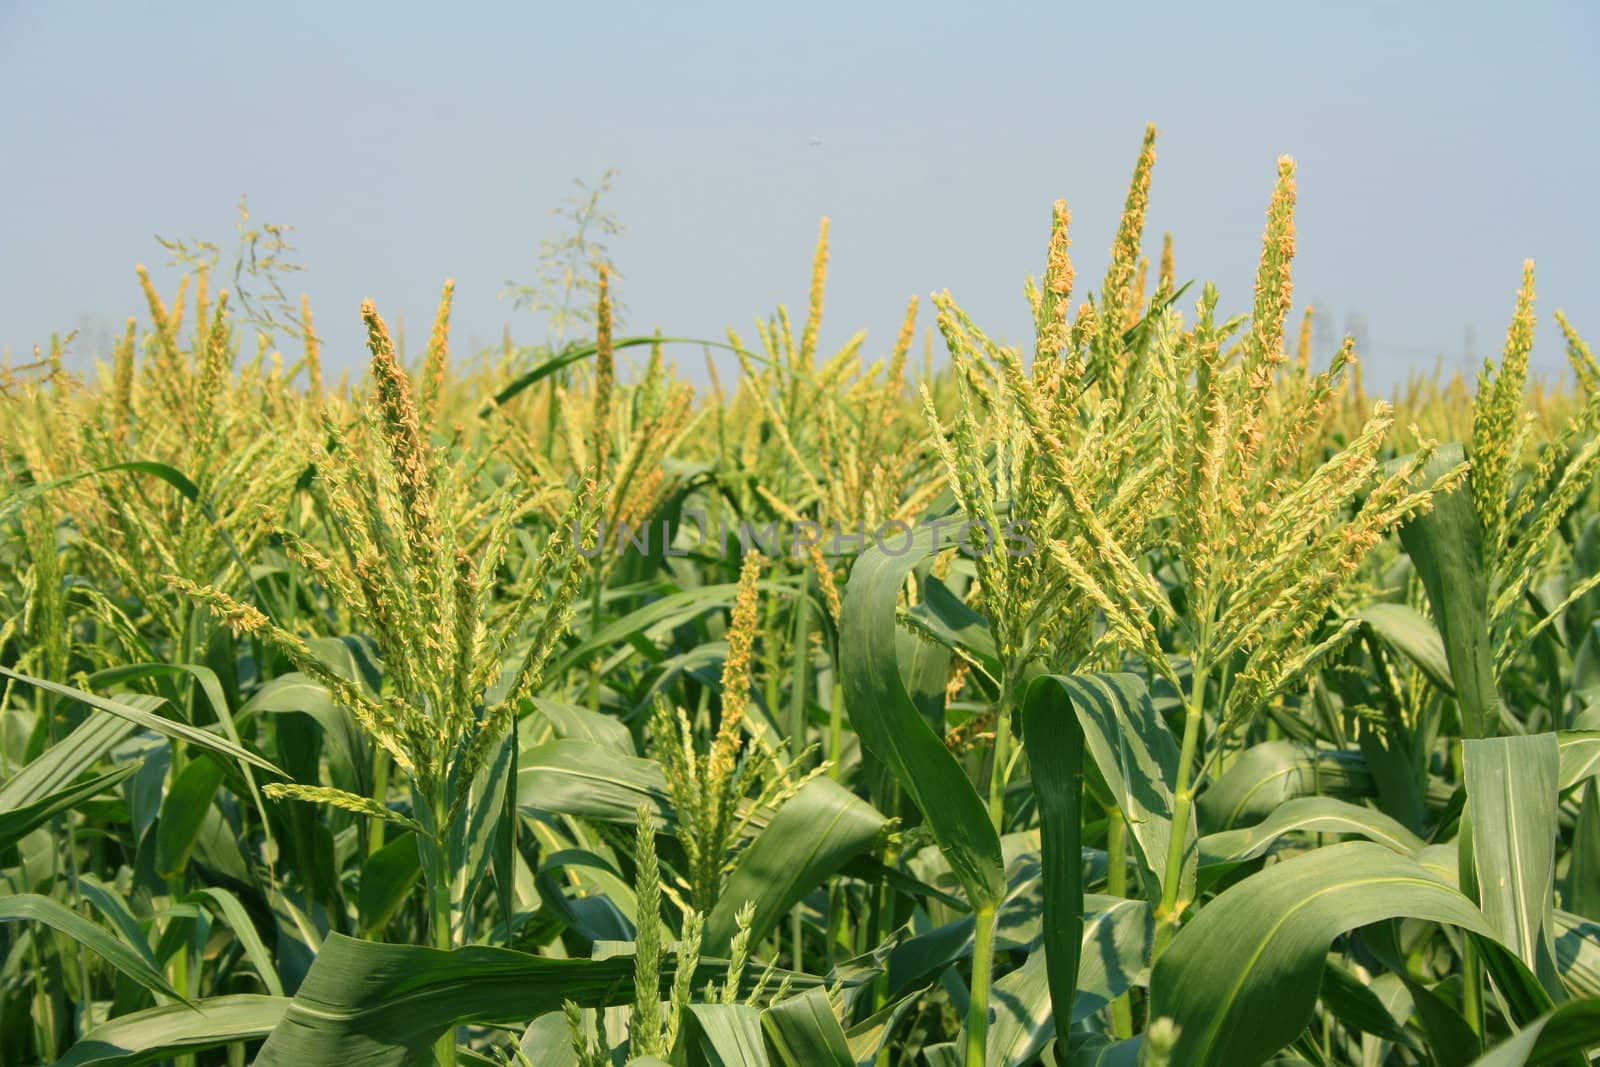 Tall corn plants on a sunny day.
